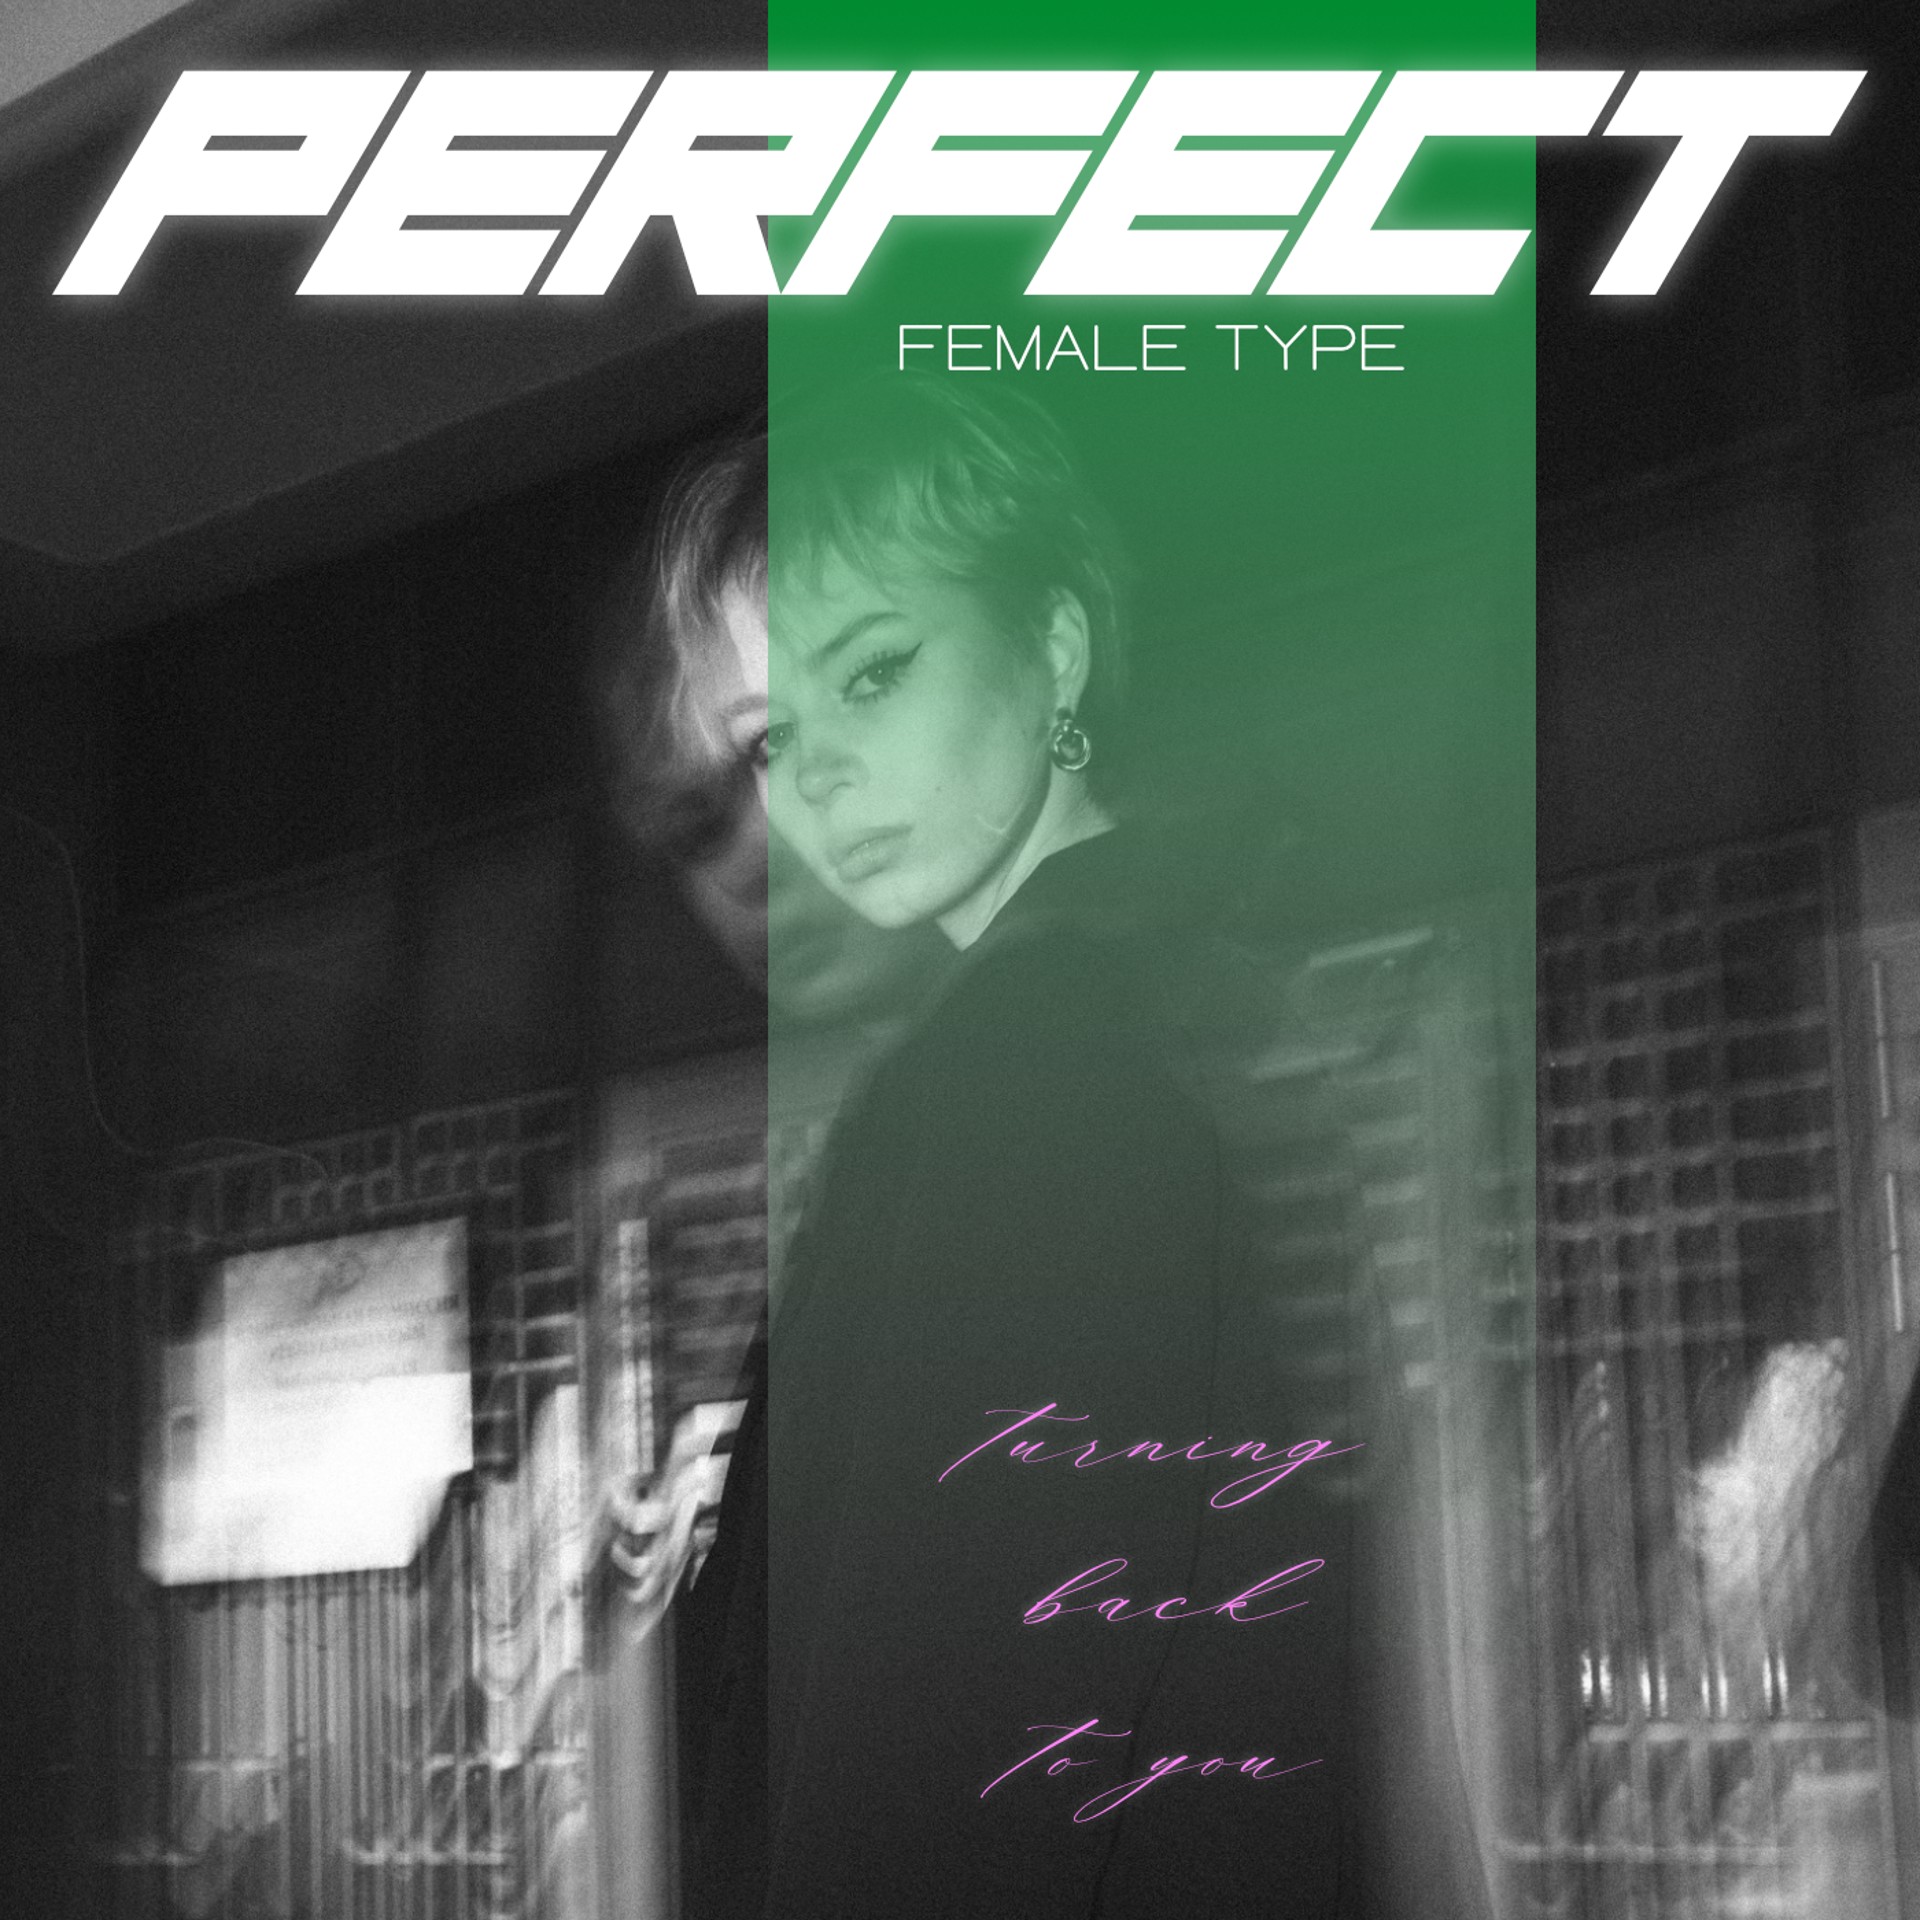 Perfect Female Type “Turning Back To You” single artwork